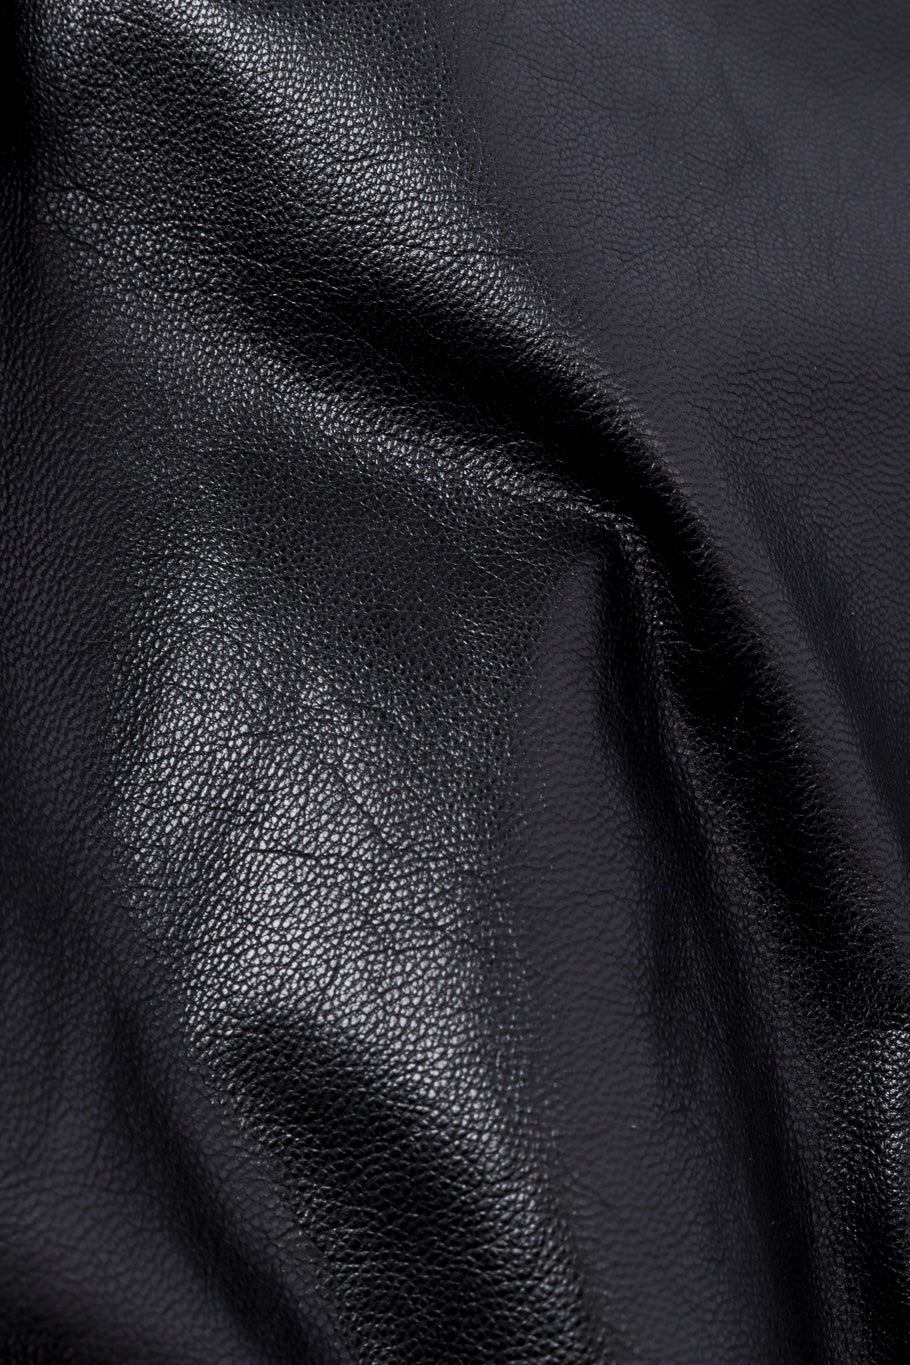 Gucci Leather Ruffle Top leather fabric closeup @Recessla